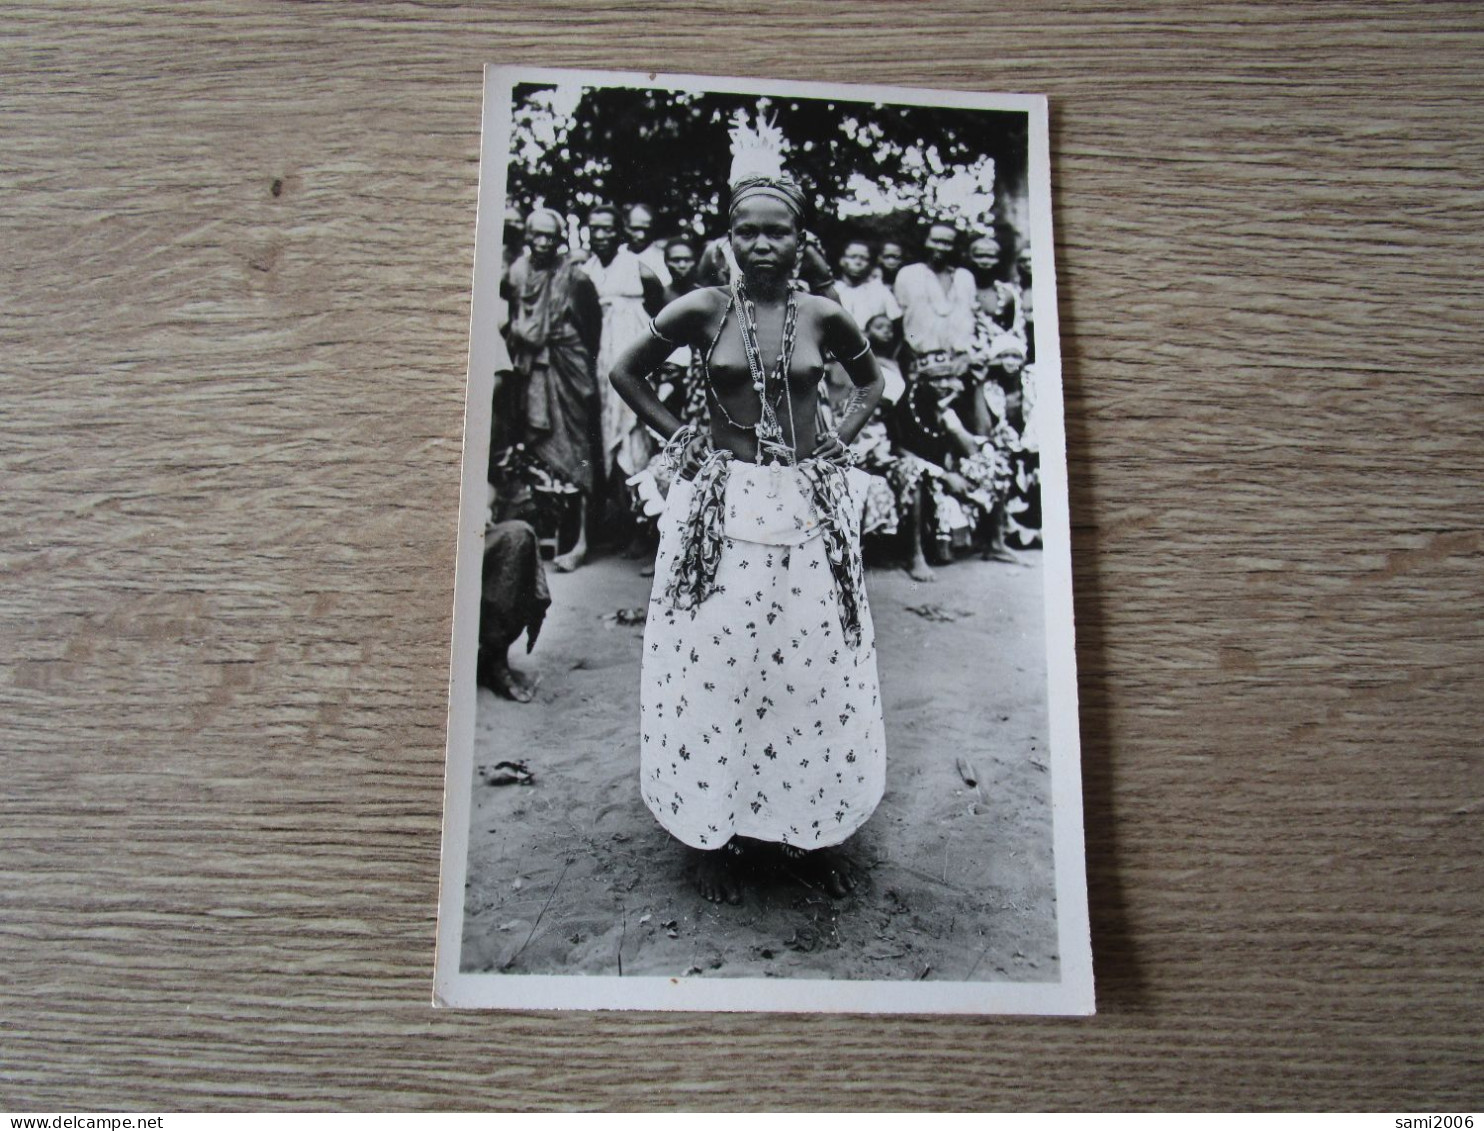 CPA PHOTO DAHOMEY JEUNE FETICHEUSE D'ABOMEY COSTUME SEINS NUS - Dahomey